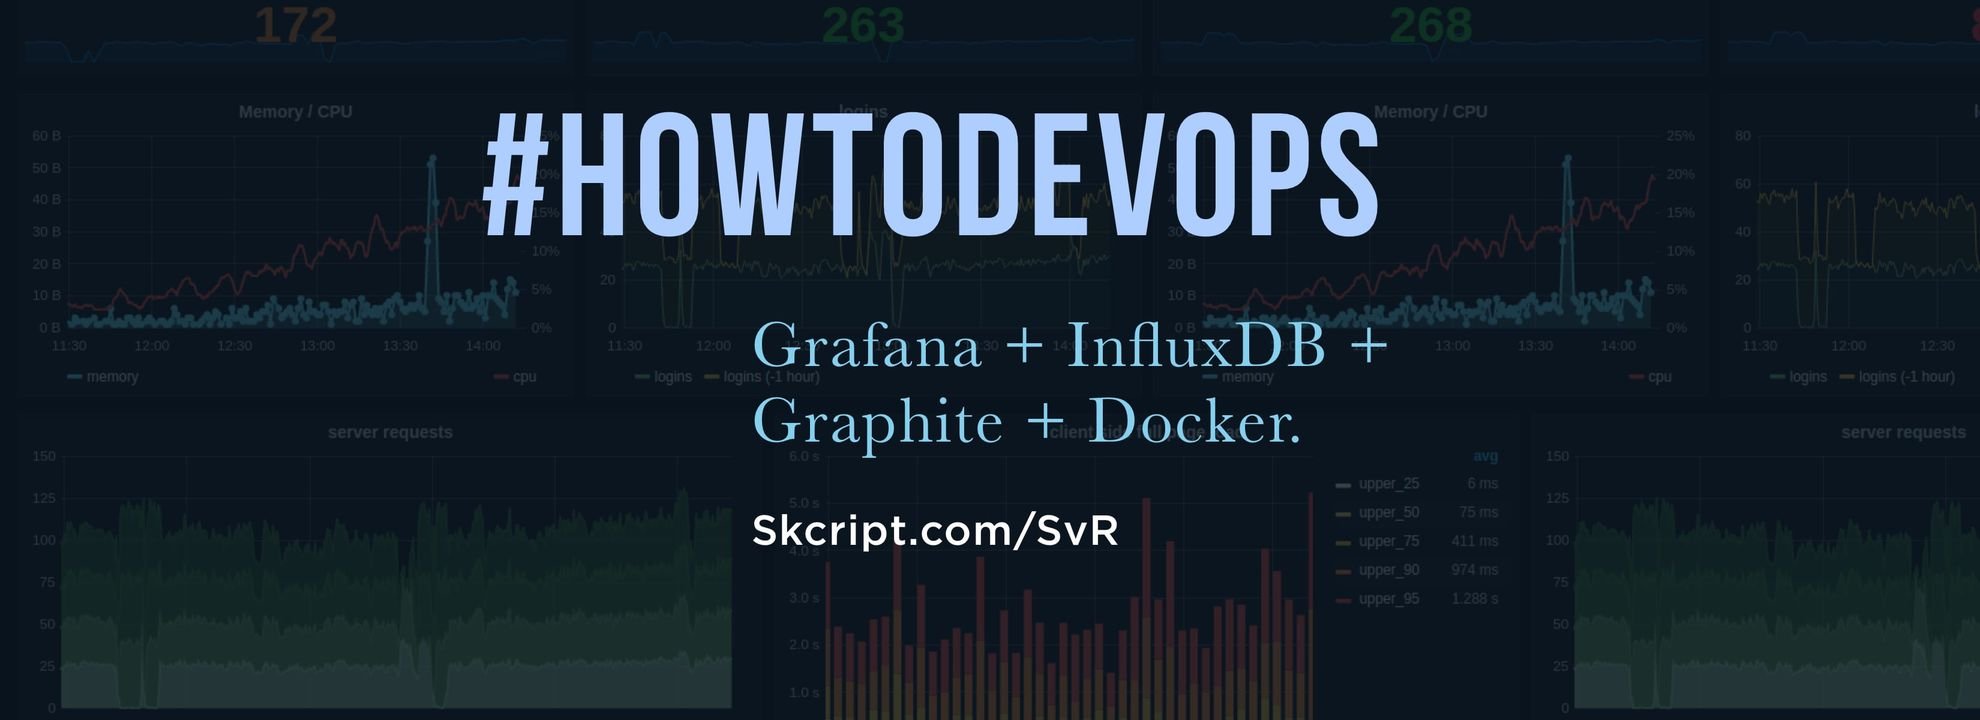 Grafana + InfluxDB setup using Docker for real-time analytics dashboard